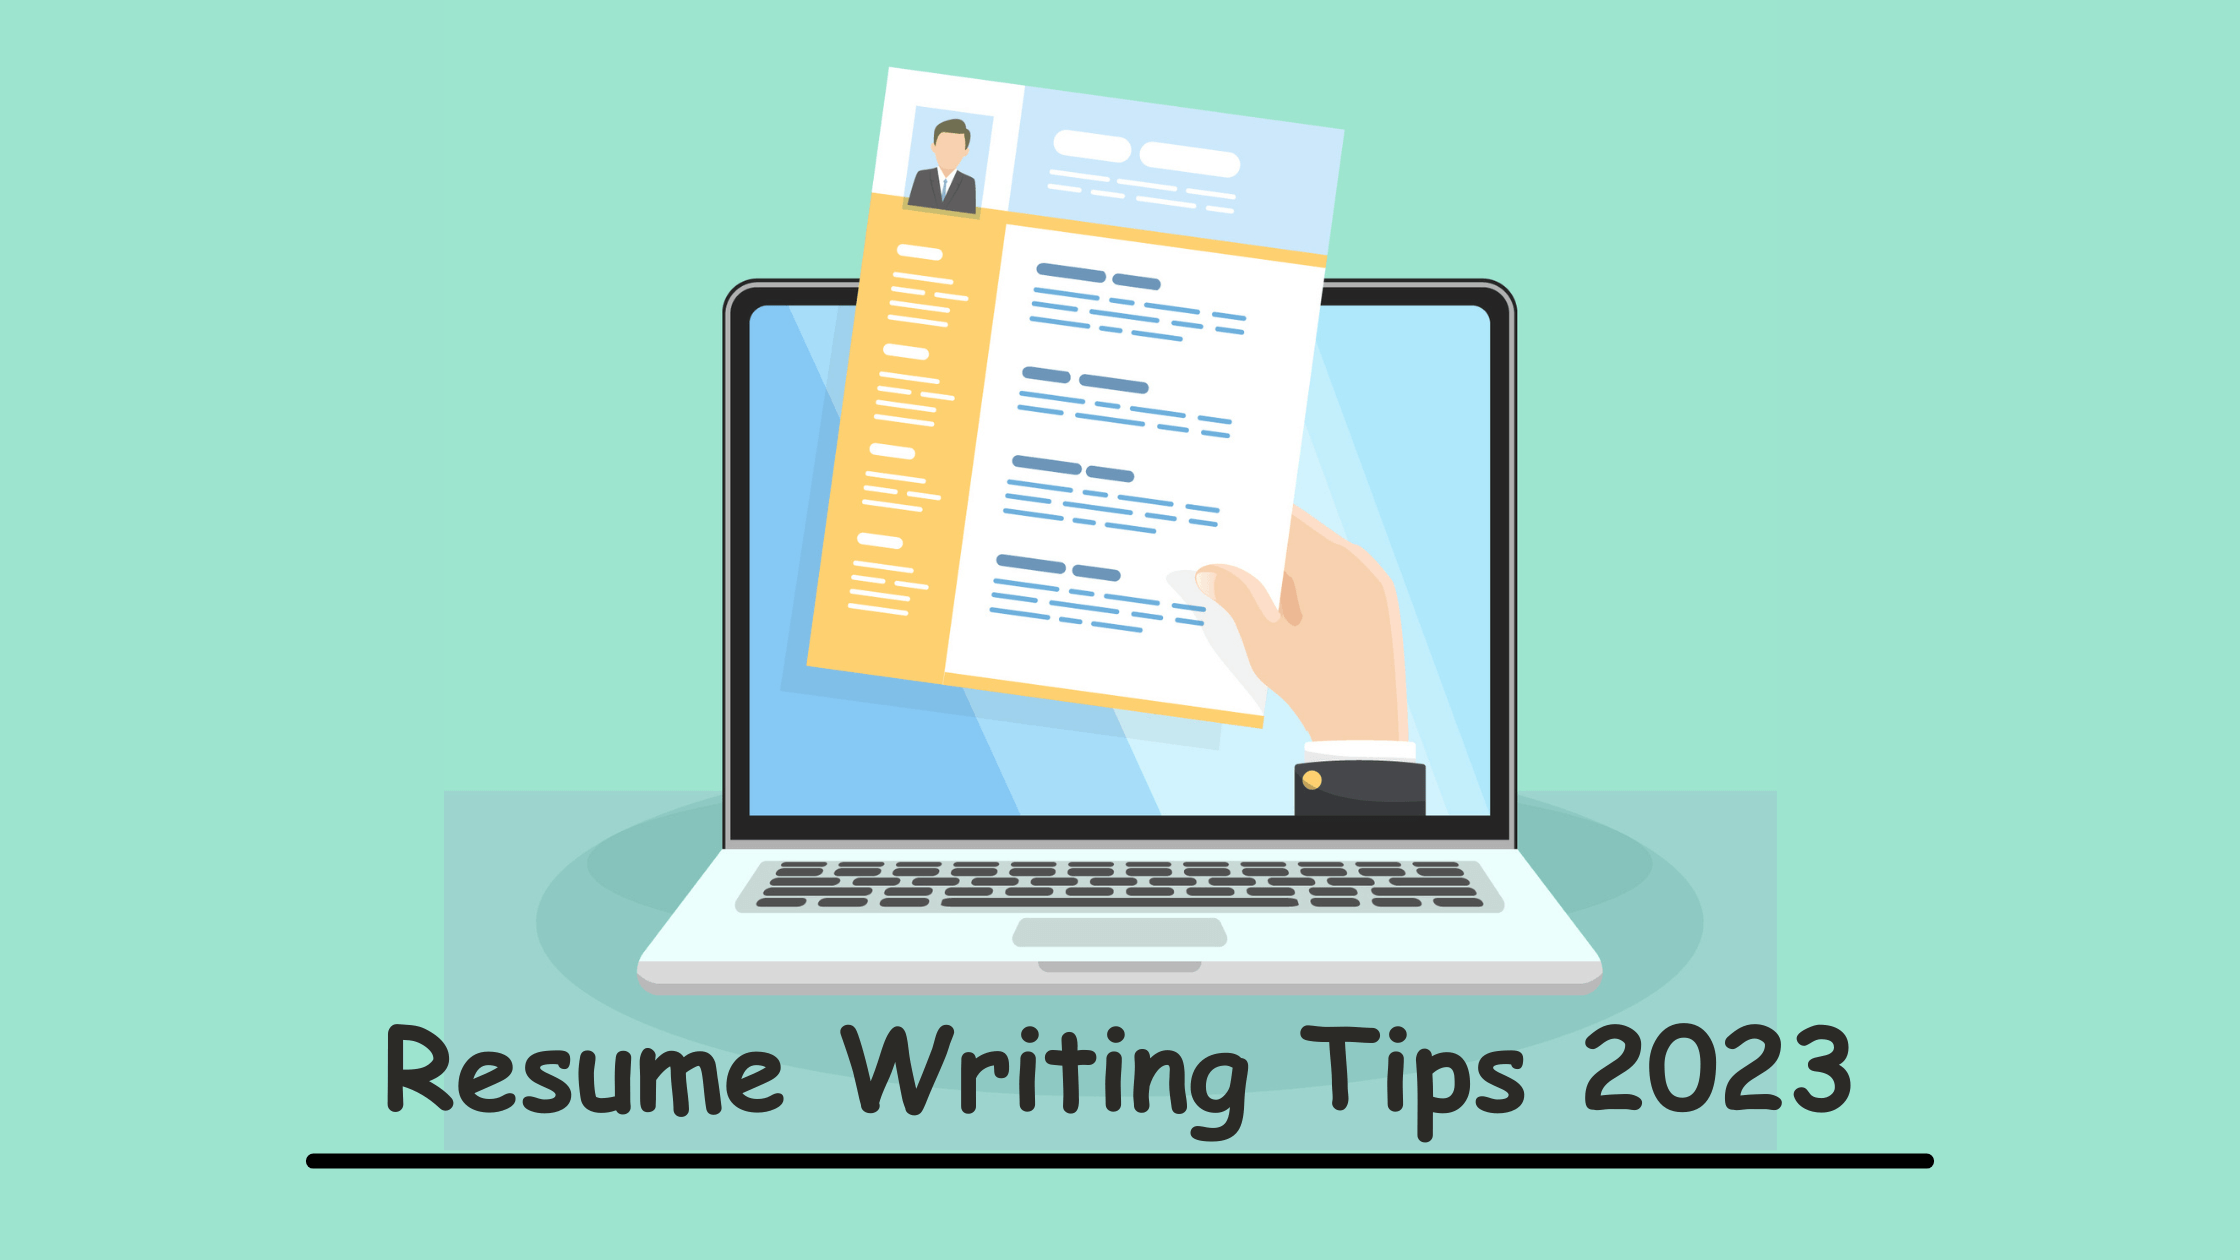 Resume Writing Tips 2023